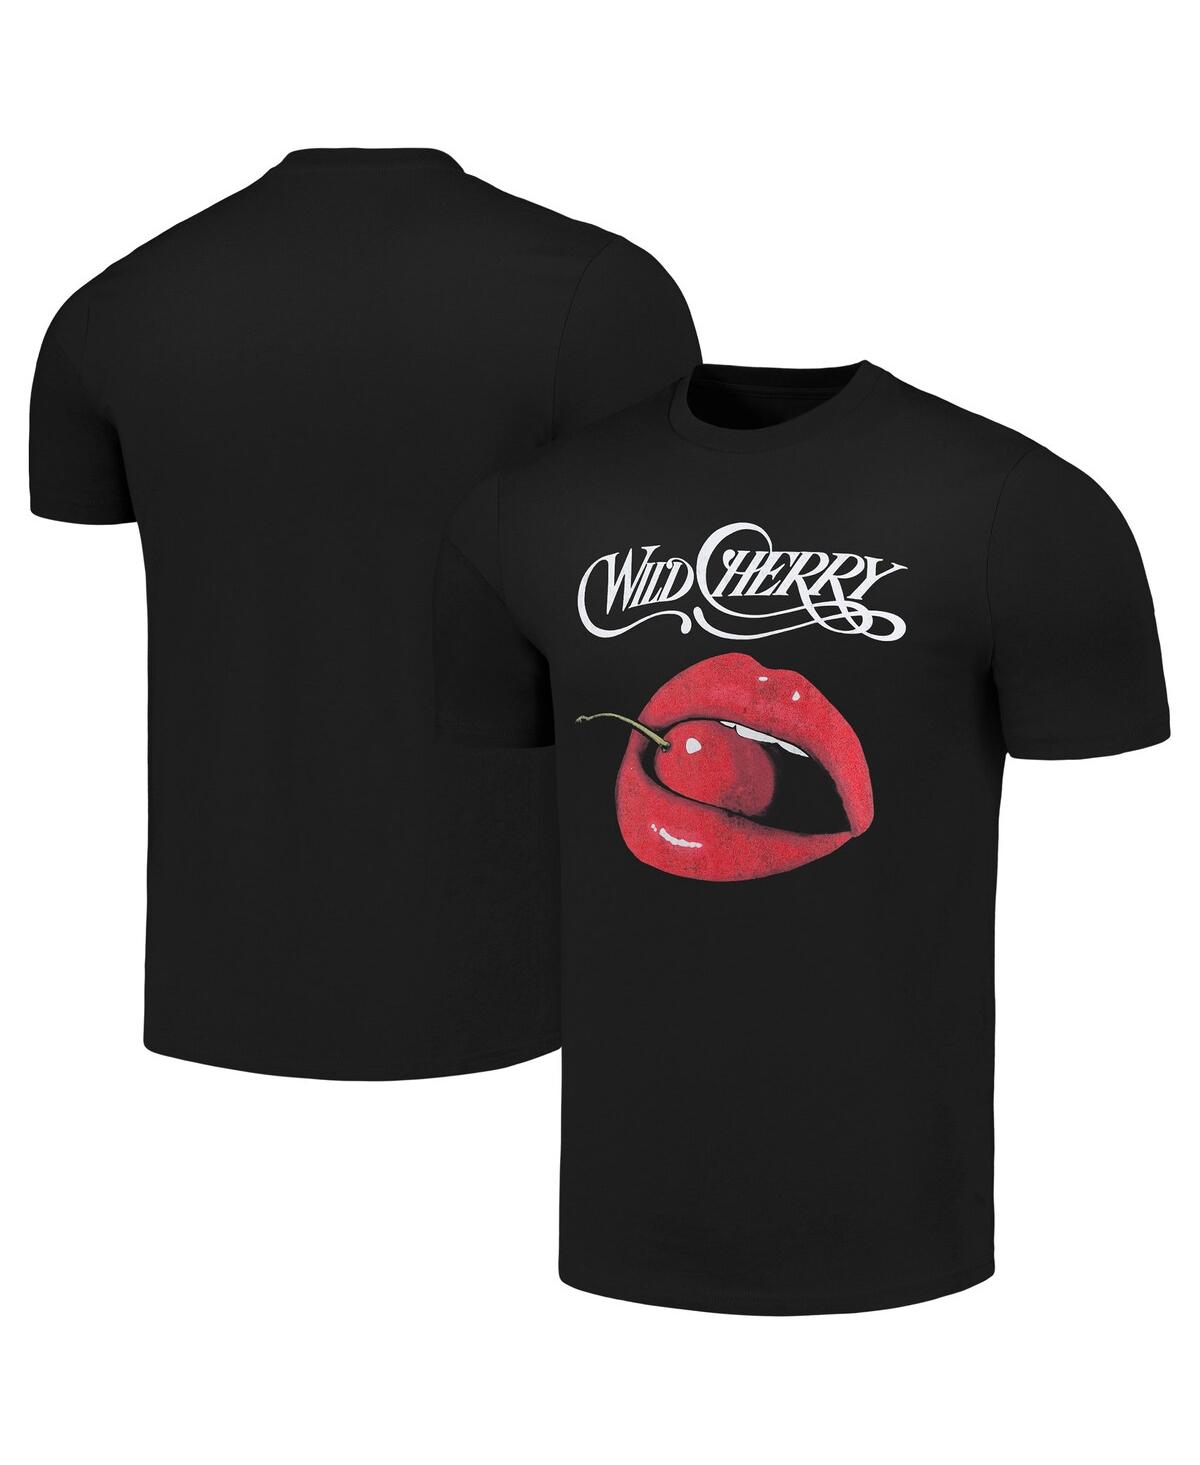 Men's Black Wild Cherry Bite T-shirt - Black